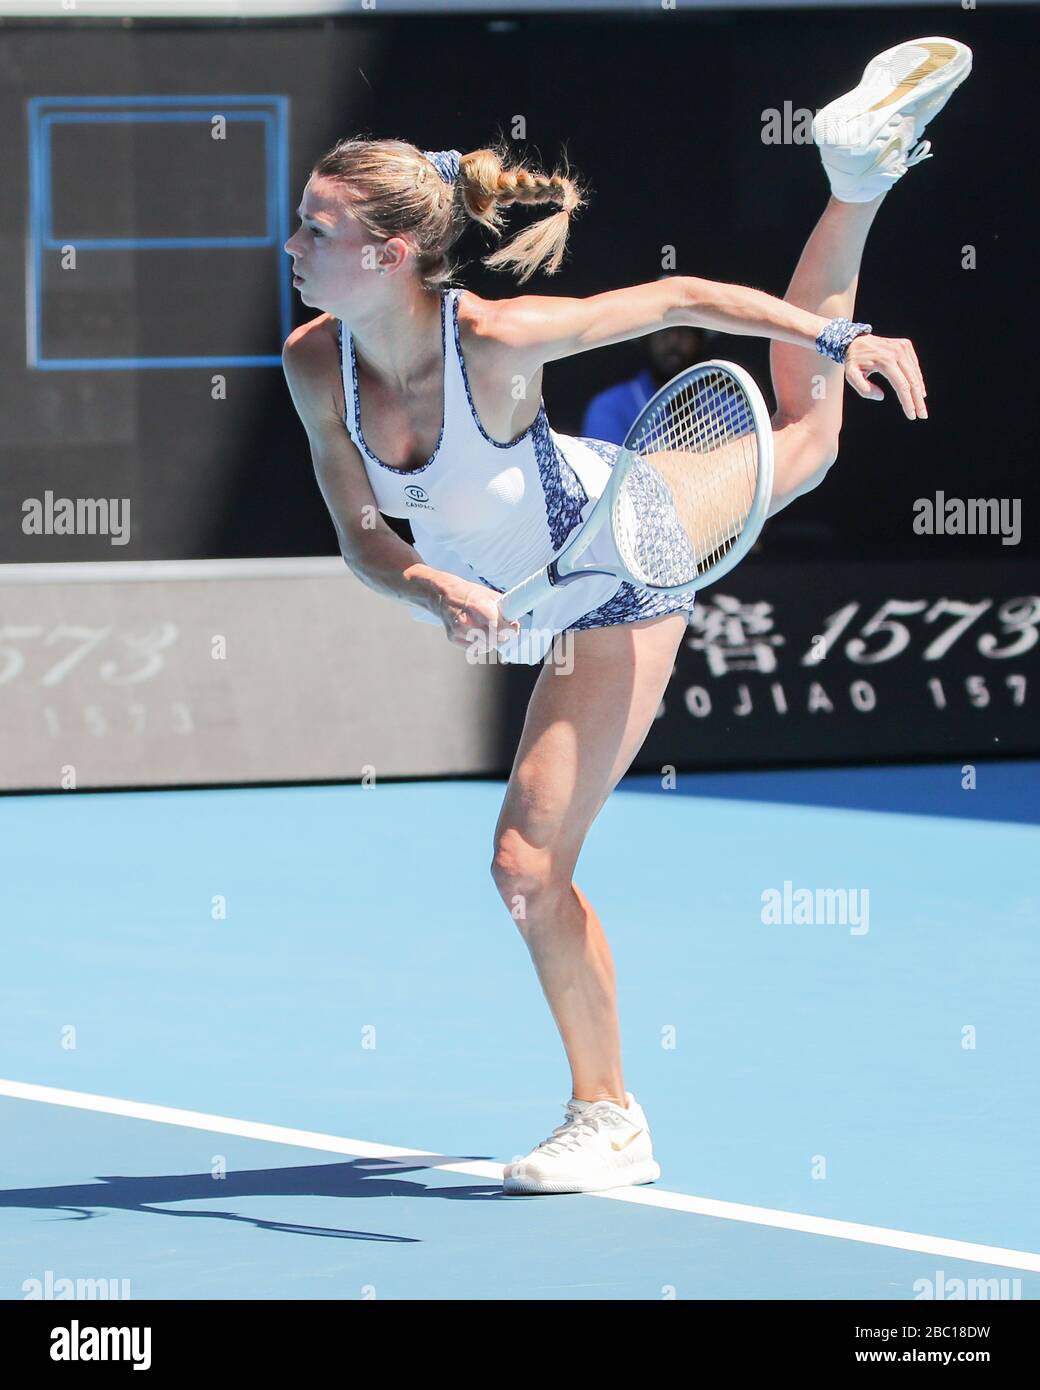 Italian tennis player Camila Giorgi serving in Australian Open 2020 tennis tournament, Melbourne Park, Melbourne, Victoria, Australia Stock Photo